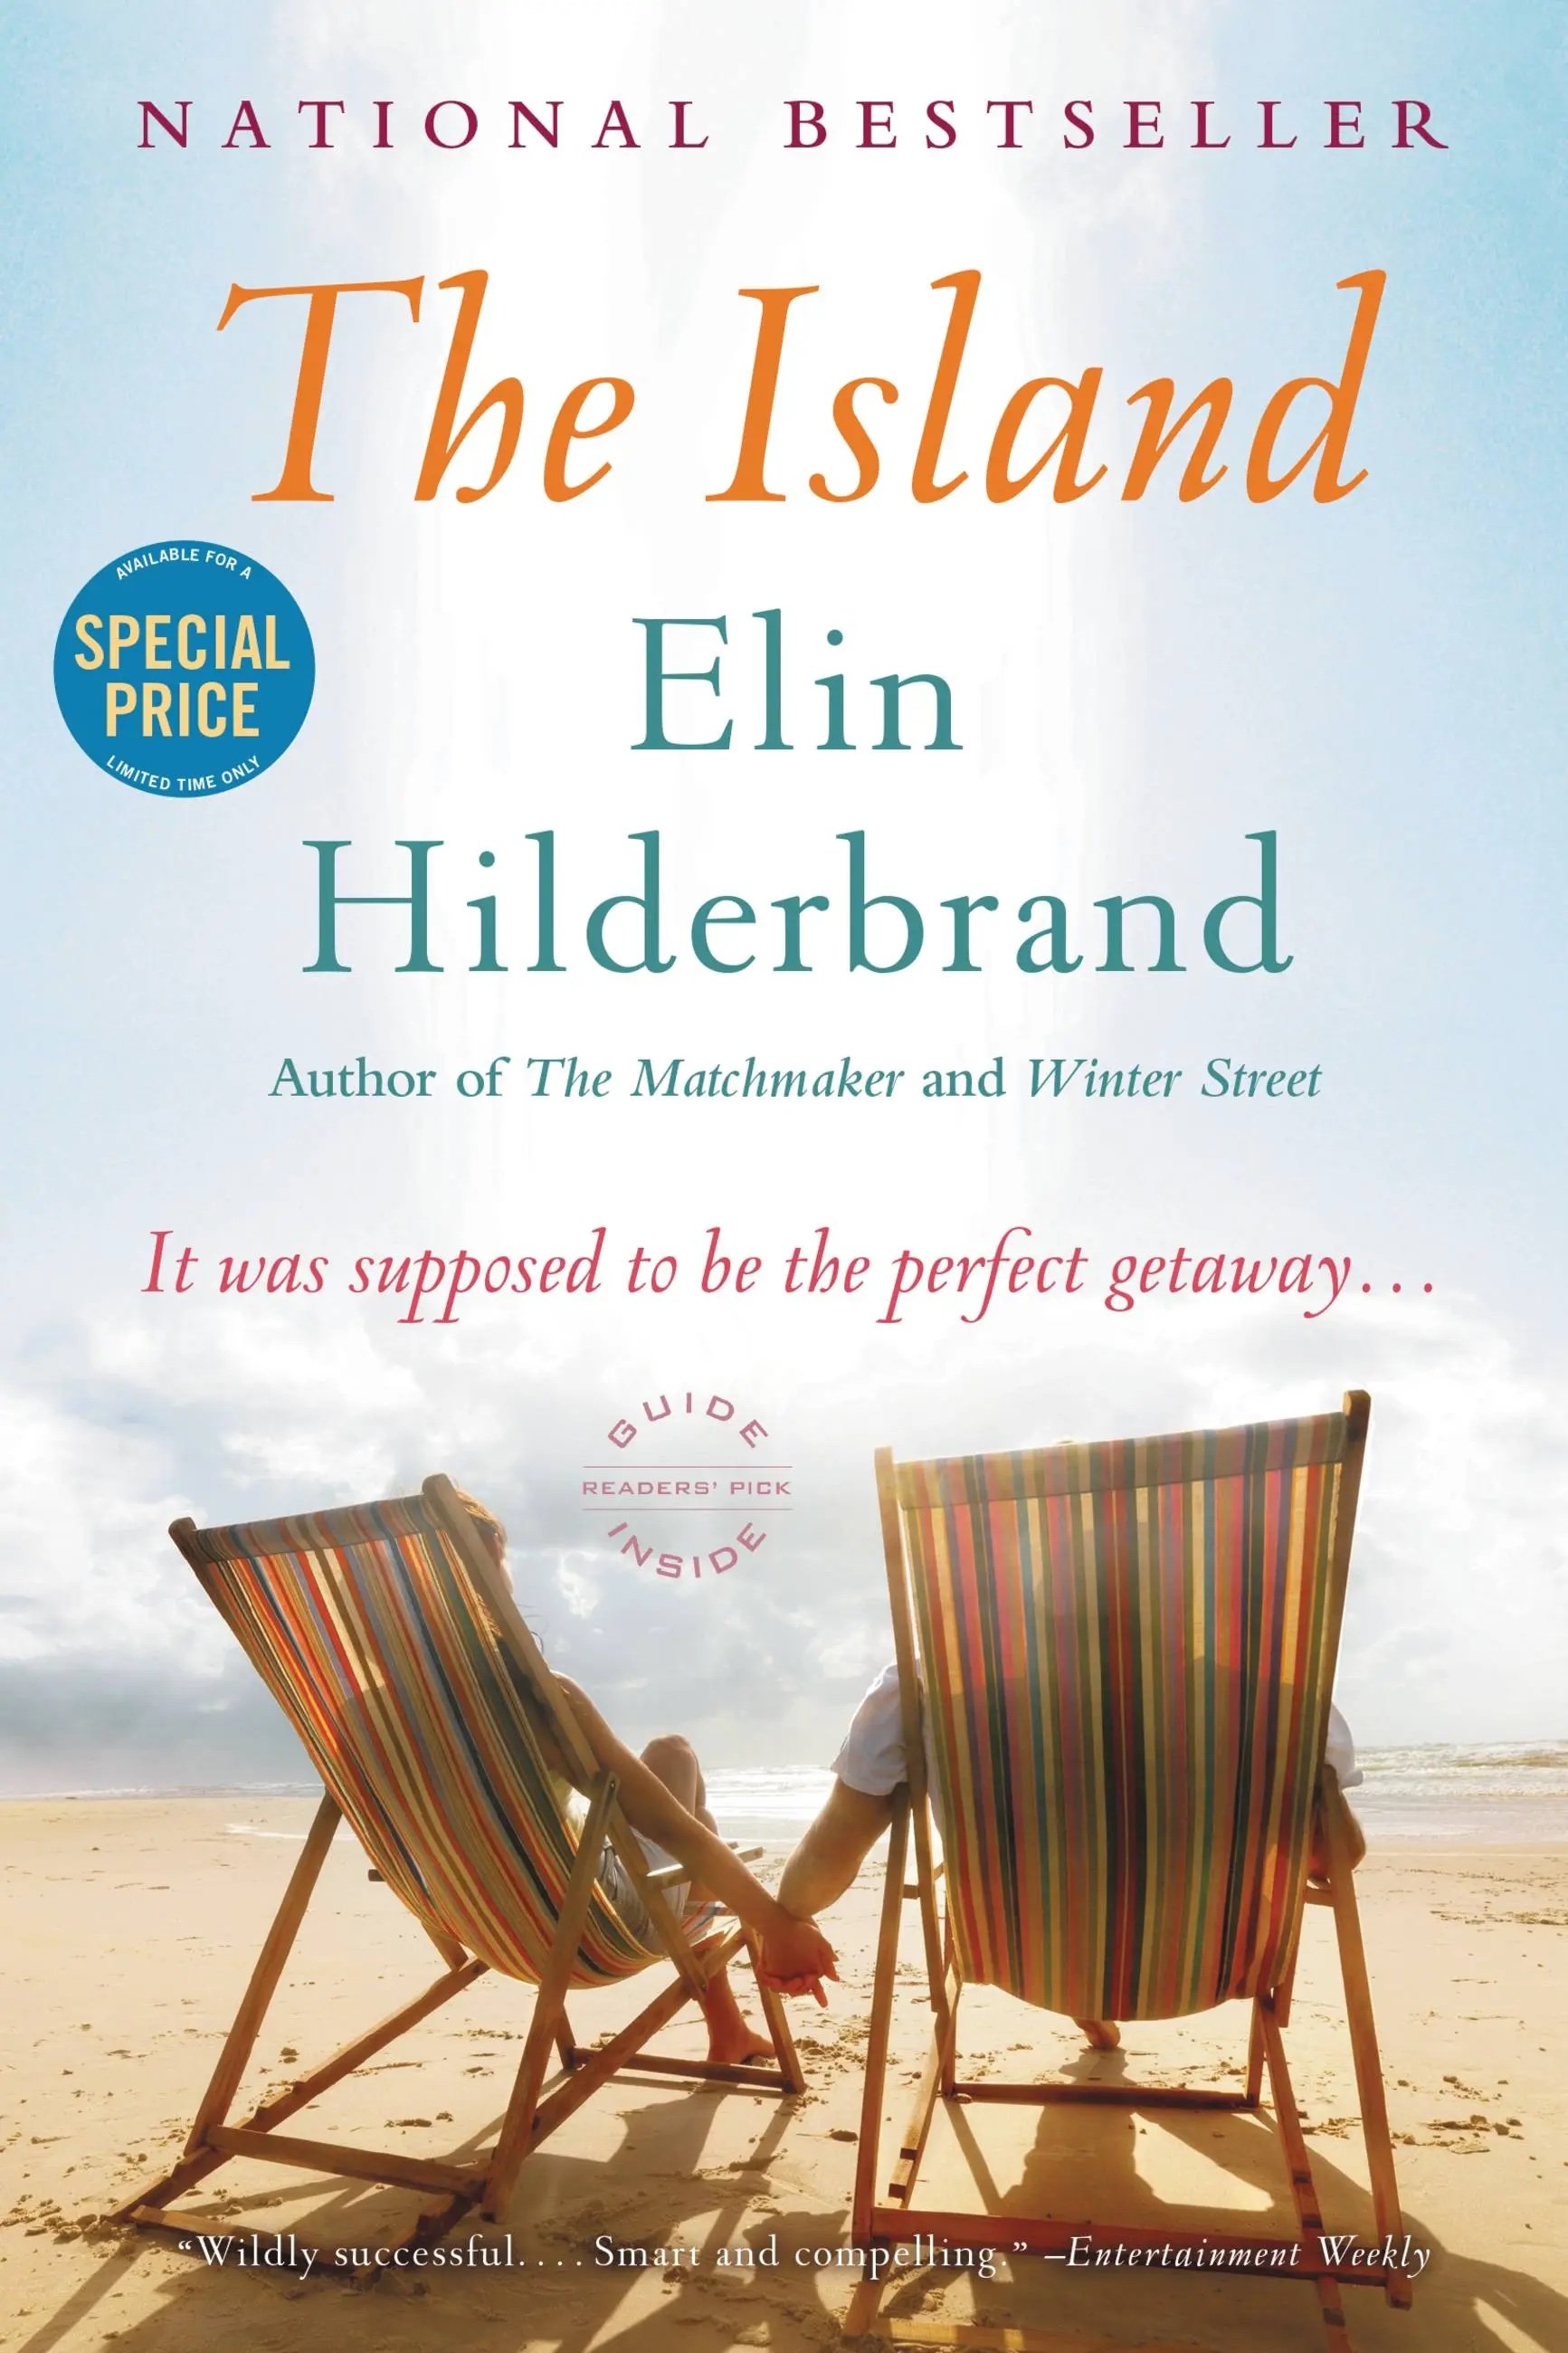 The Island by elin hilderbrand copy.jpg